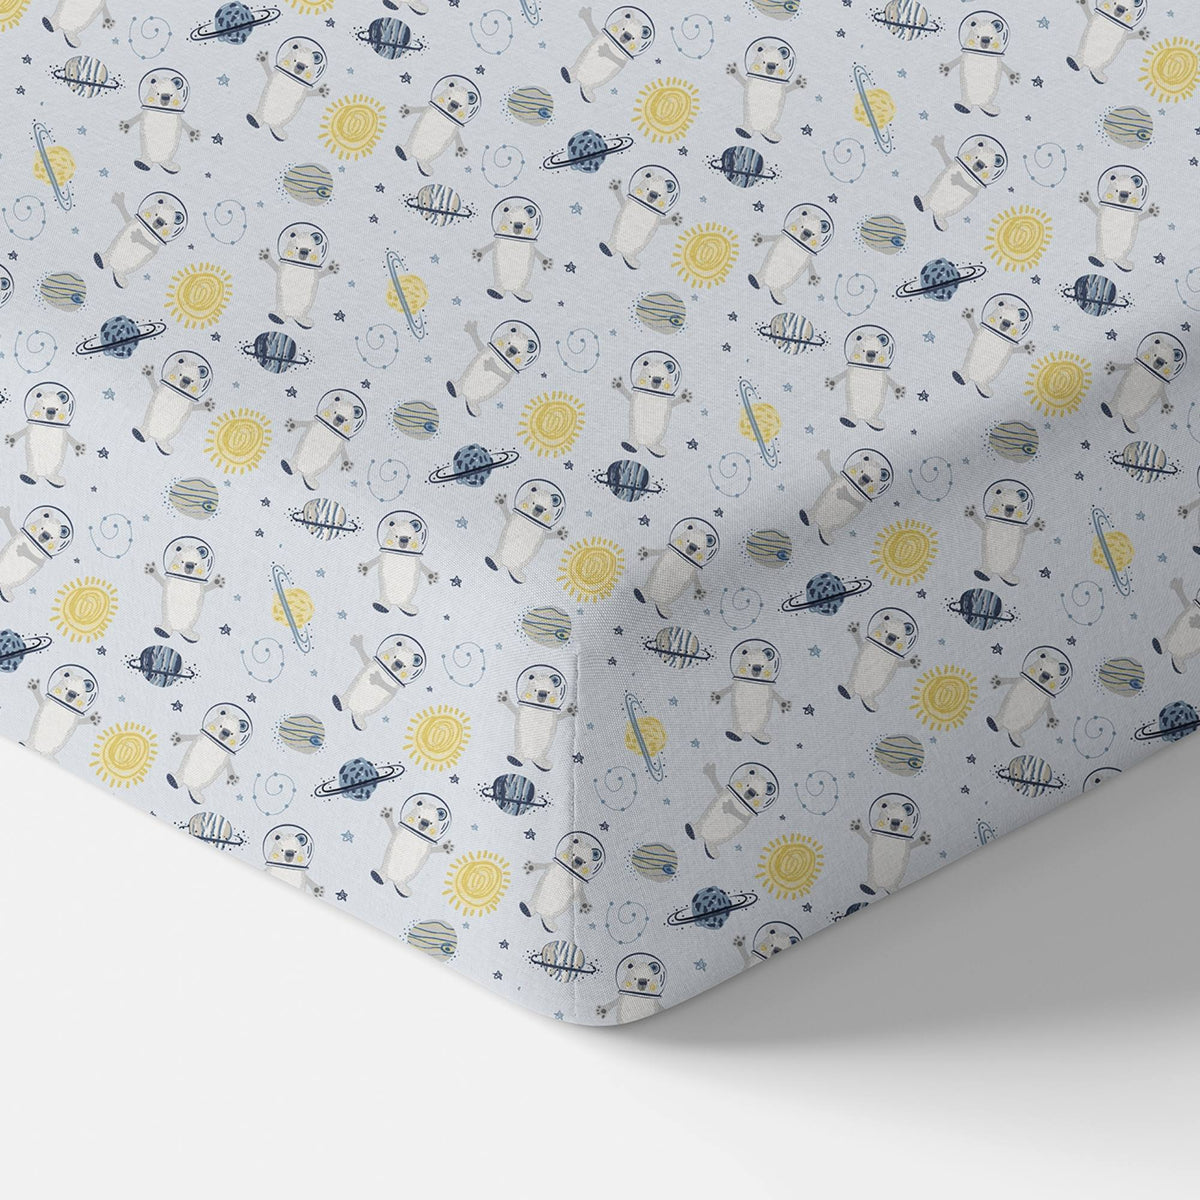 Norani Baby Crib Sheet Cover - Fun blue space bears